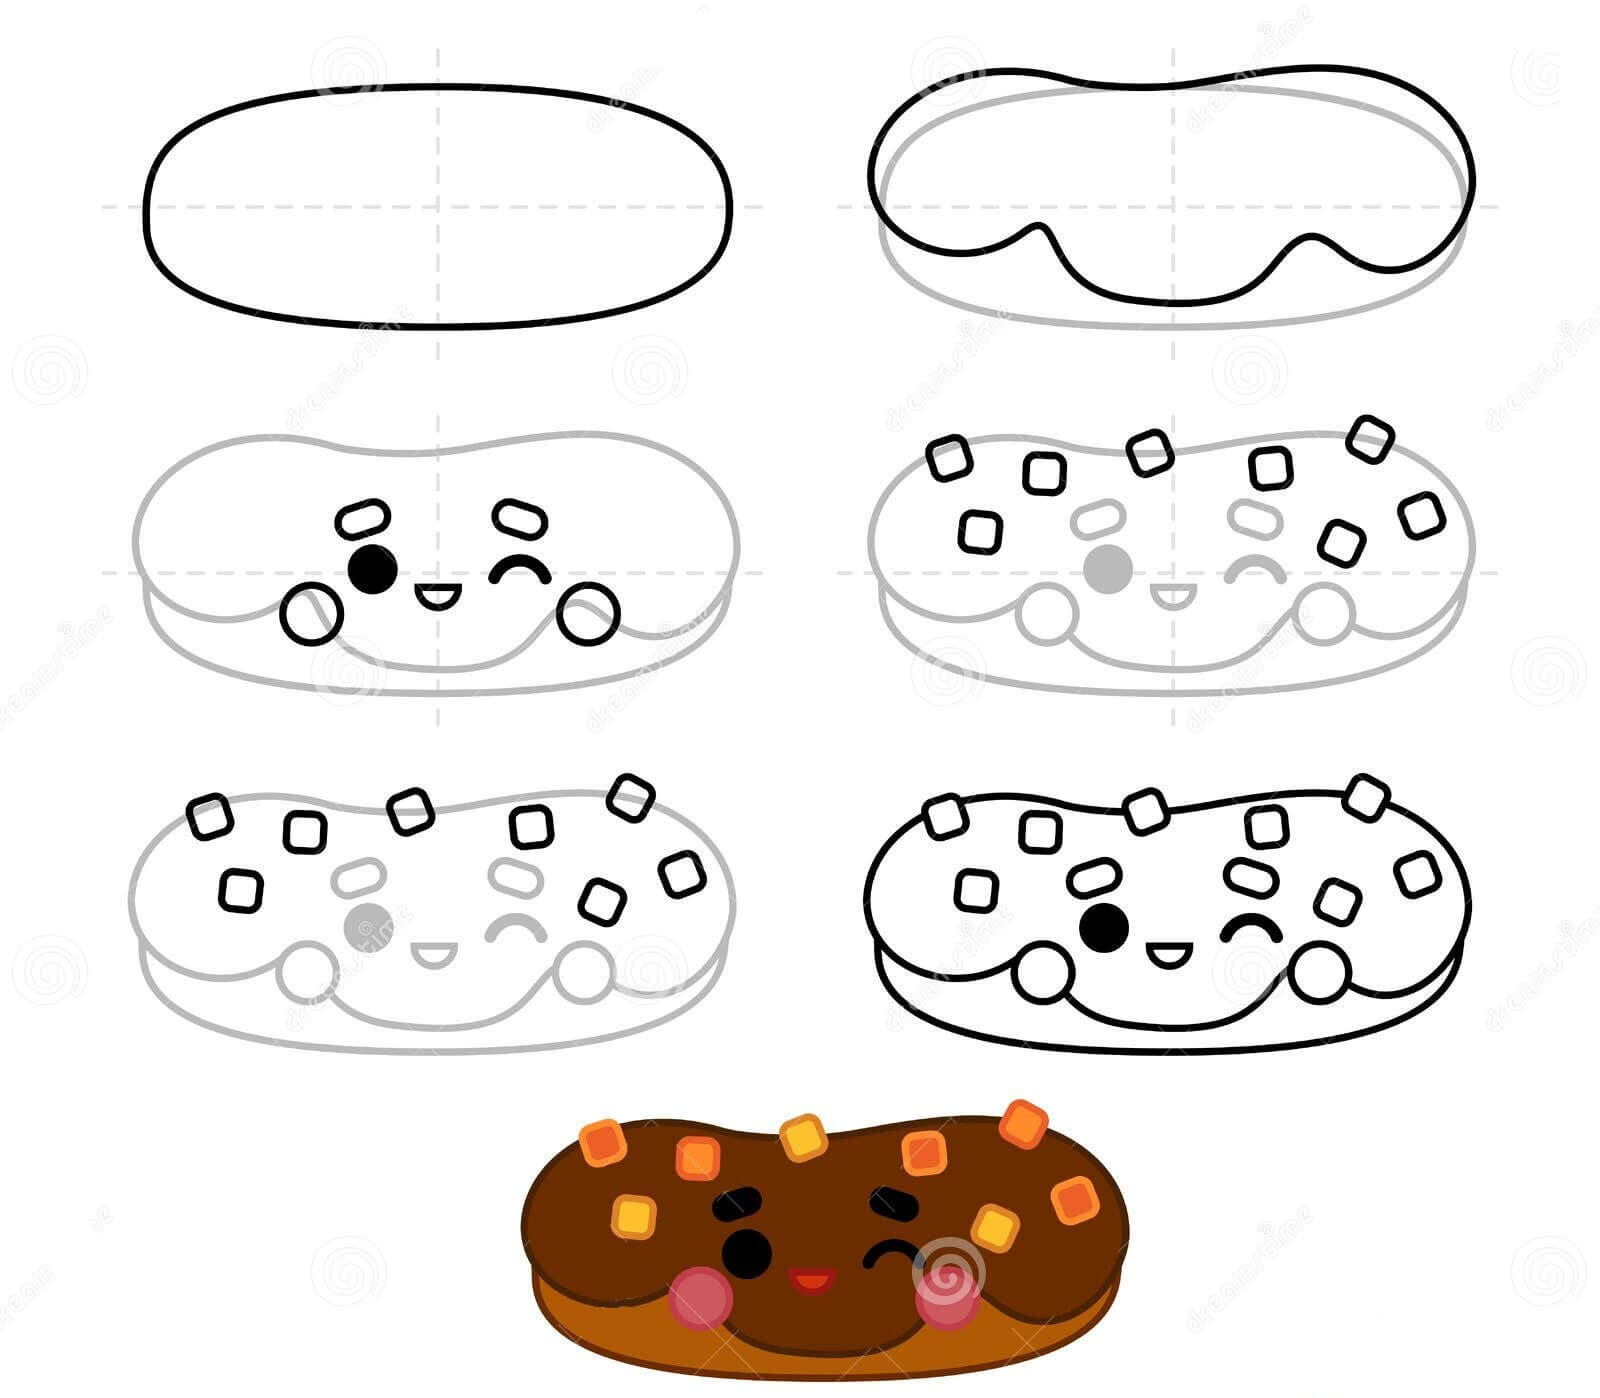 Donut idea (20) Drawing Ideas